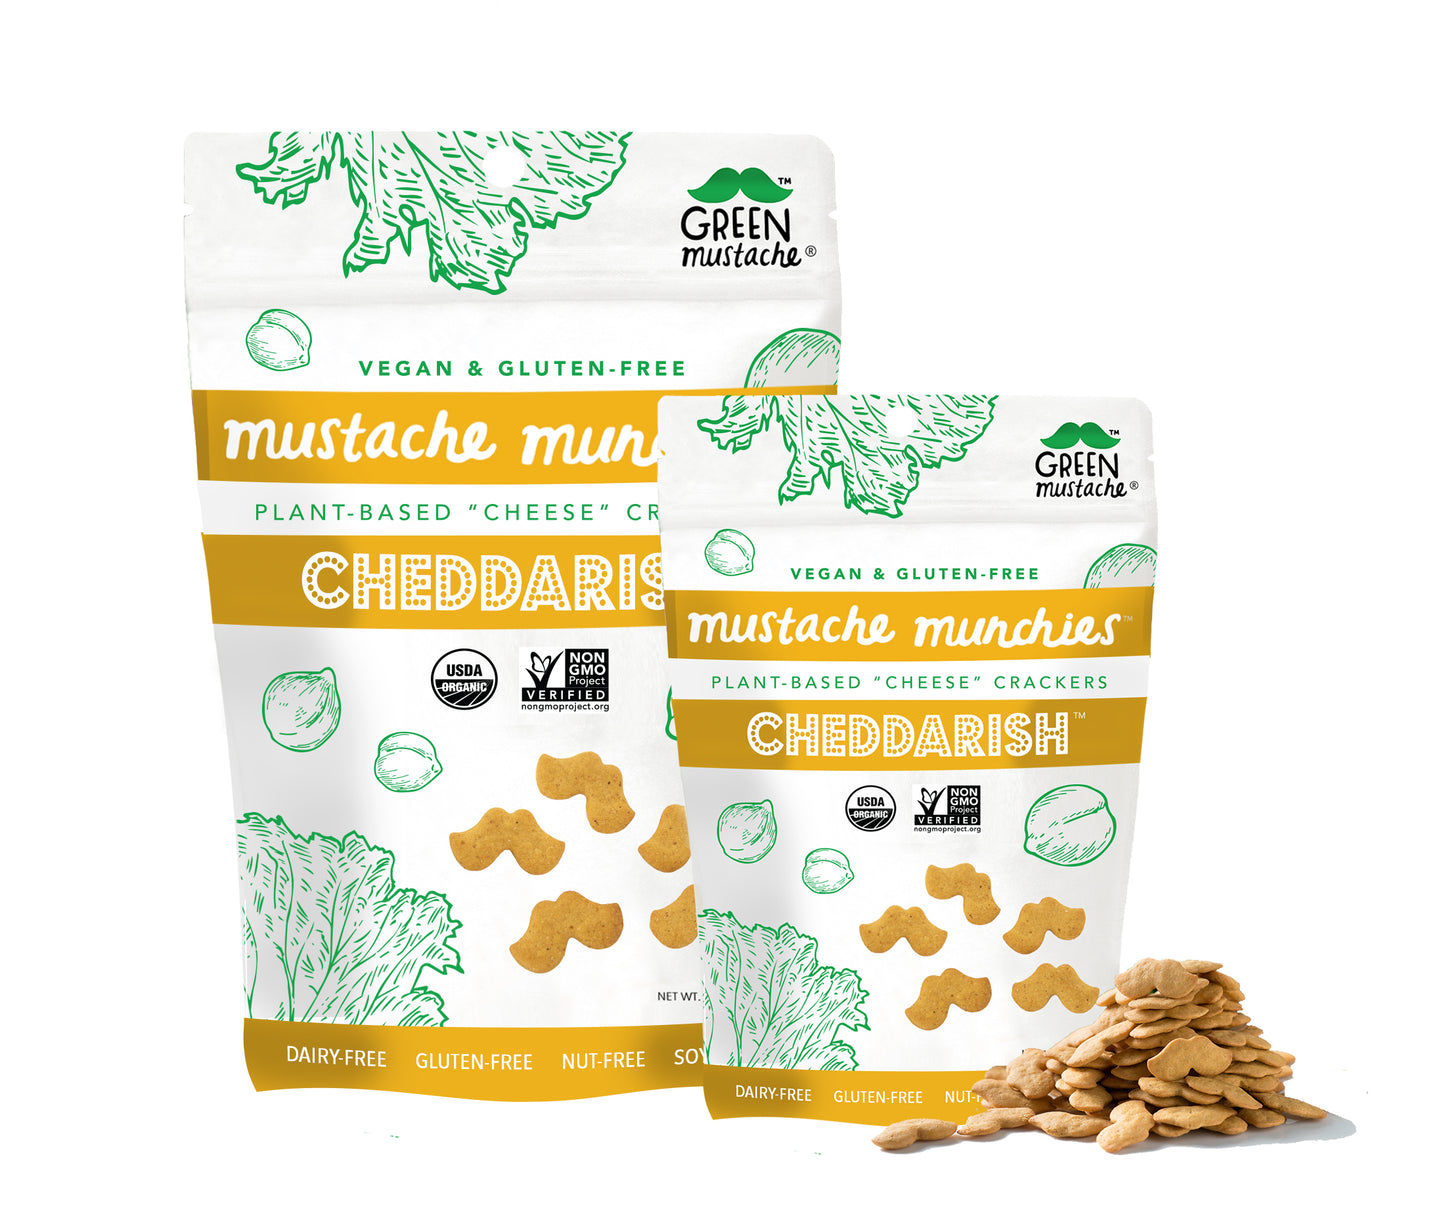 Mustache Munchies "Cheddarish" Crackers, Snacks, Green Mustache, Mustache Munchies, healthy organic vegan gluten-free snack crackers